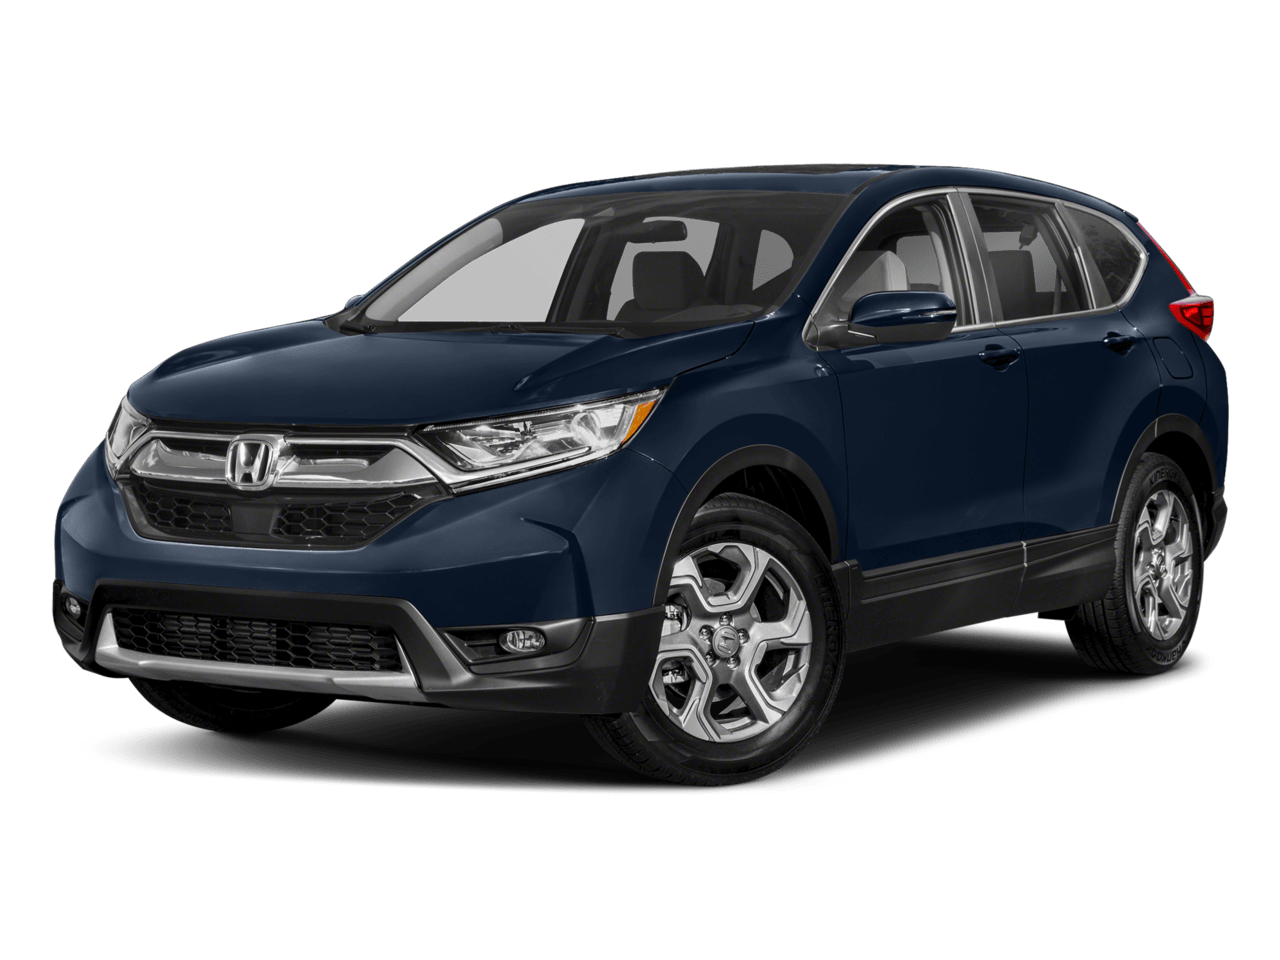 Honda CR-V SUV Rental